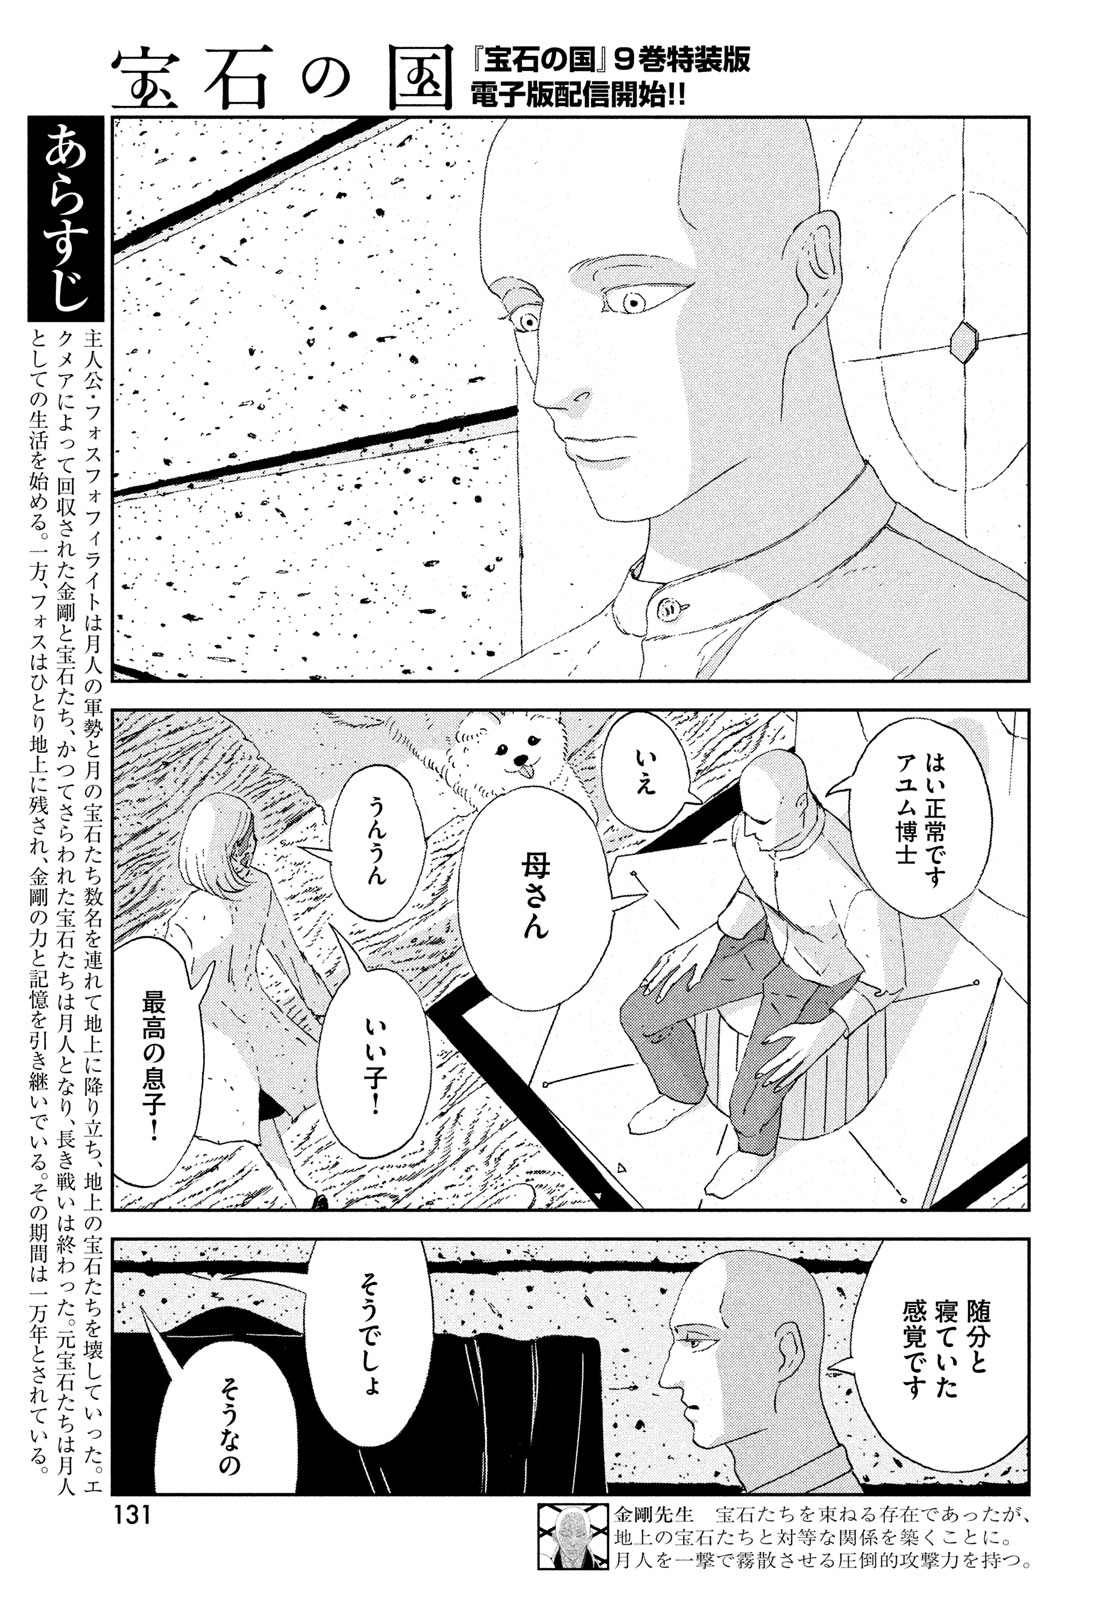 Houseki no Kuni - Chapter 97 - Page 3